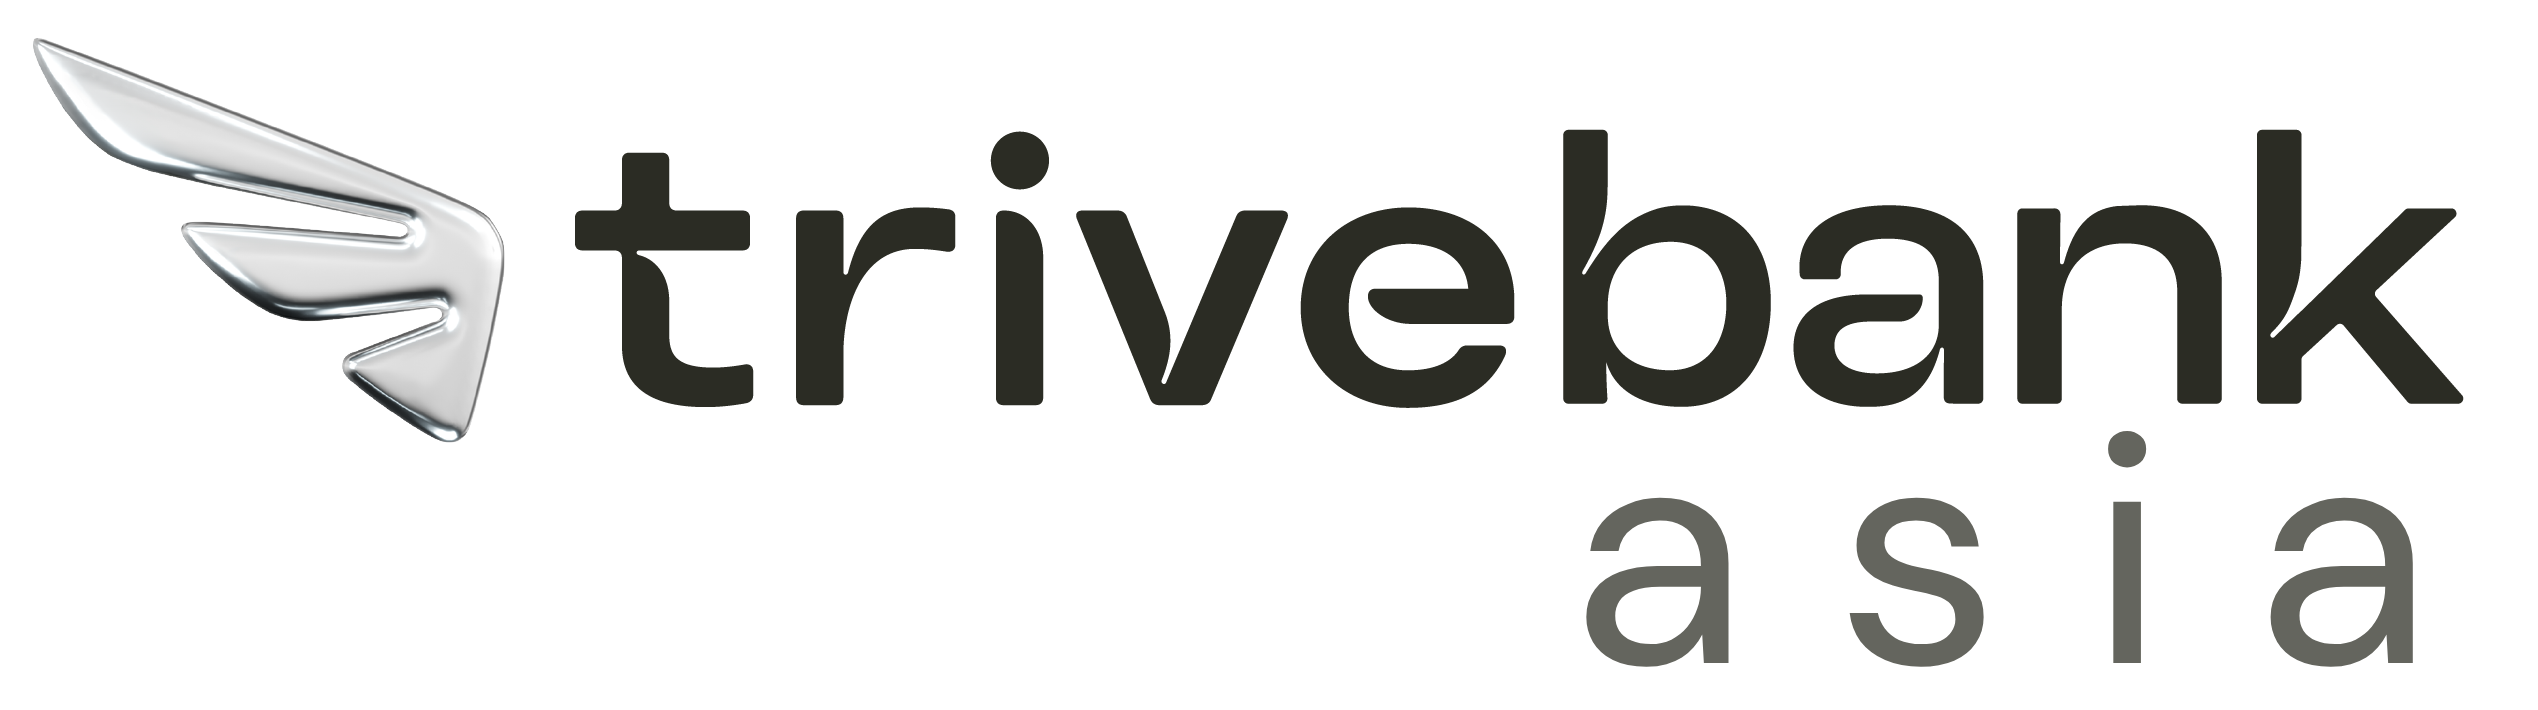 trivebankasia logo